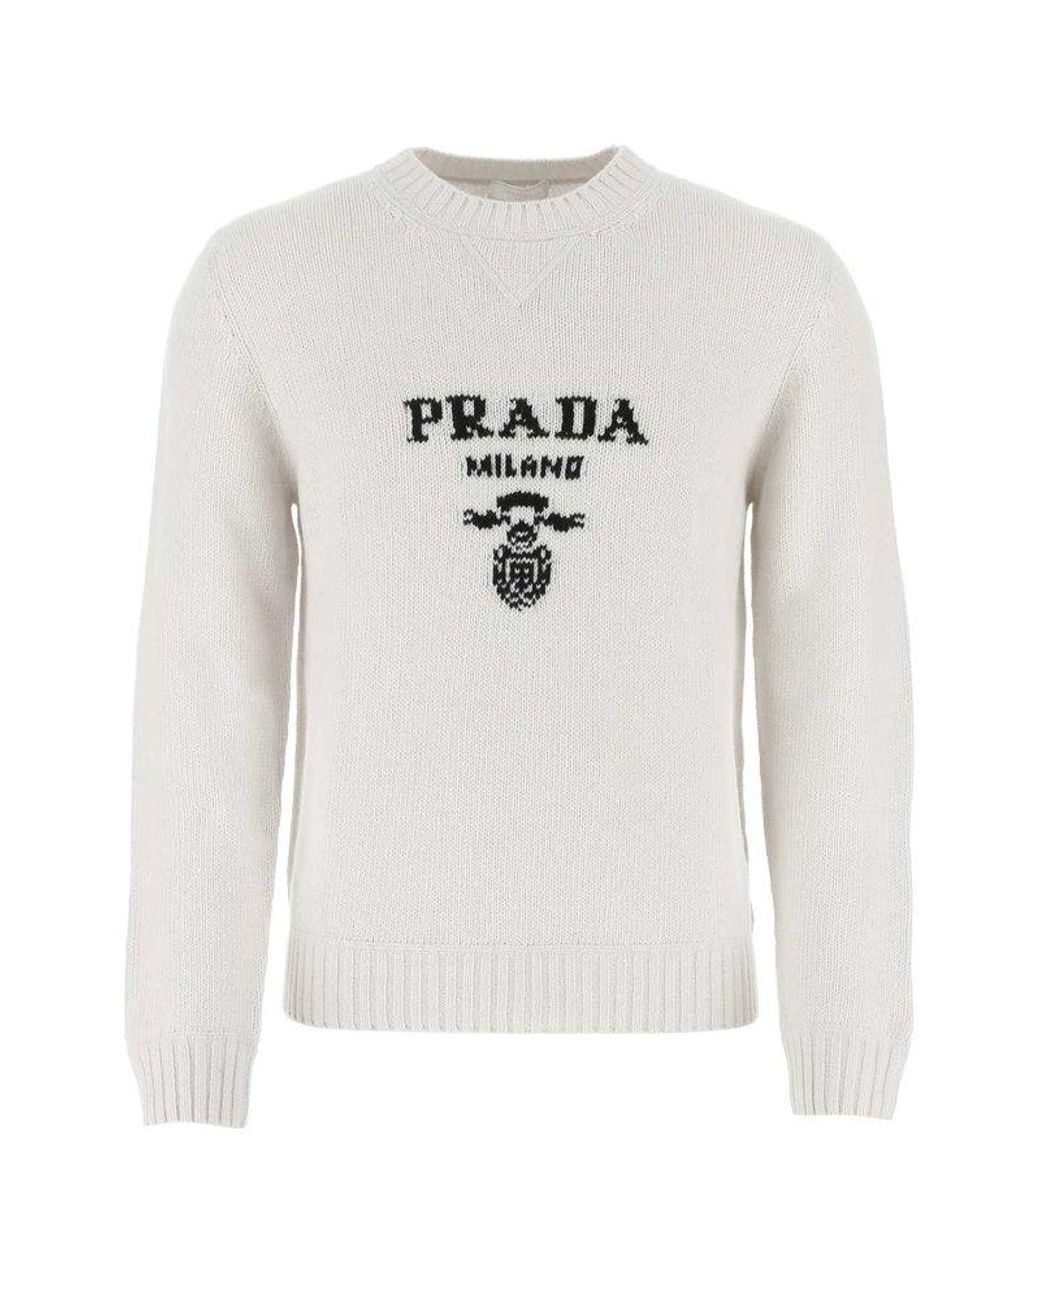 Prada Intarsia Logo Knit Crew-neck Sweater in White for Men | Lyst